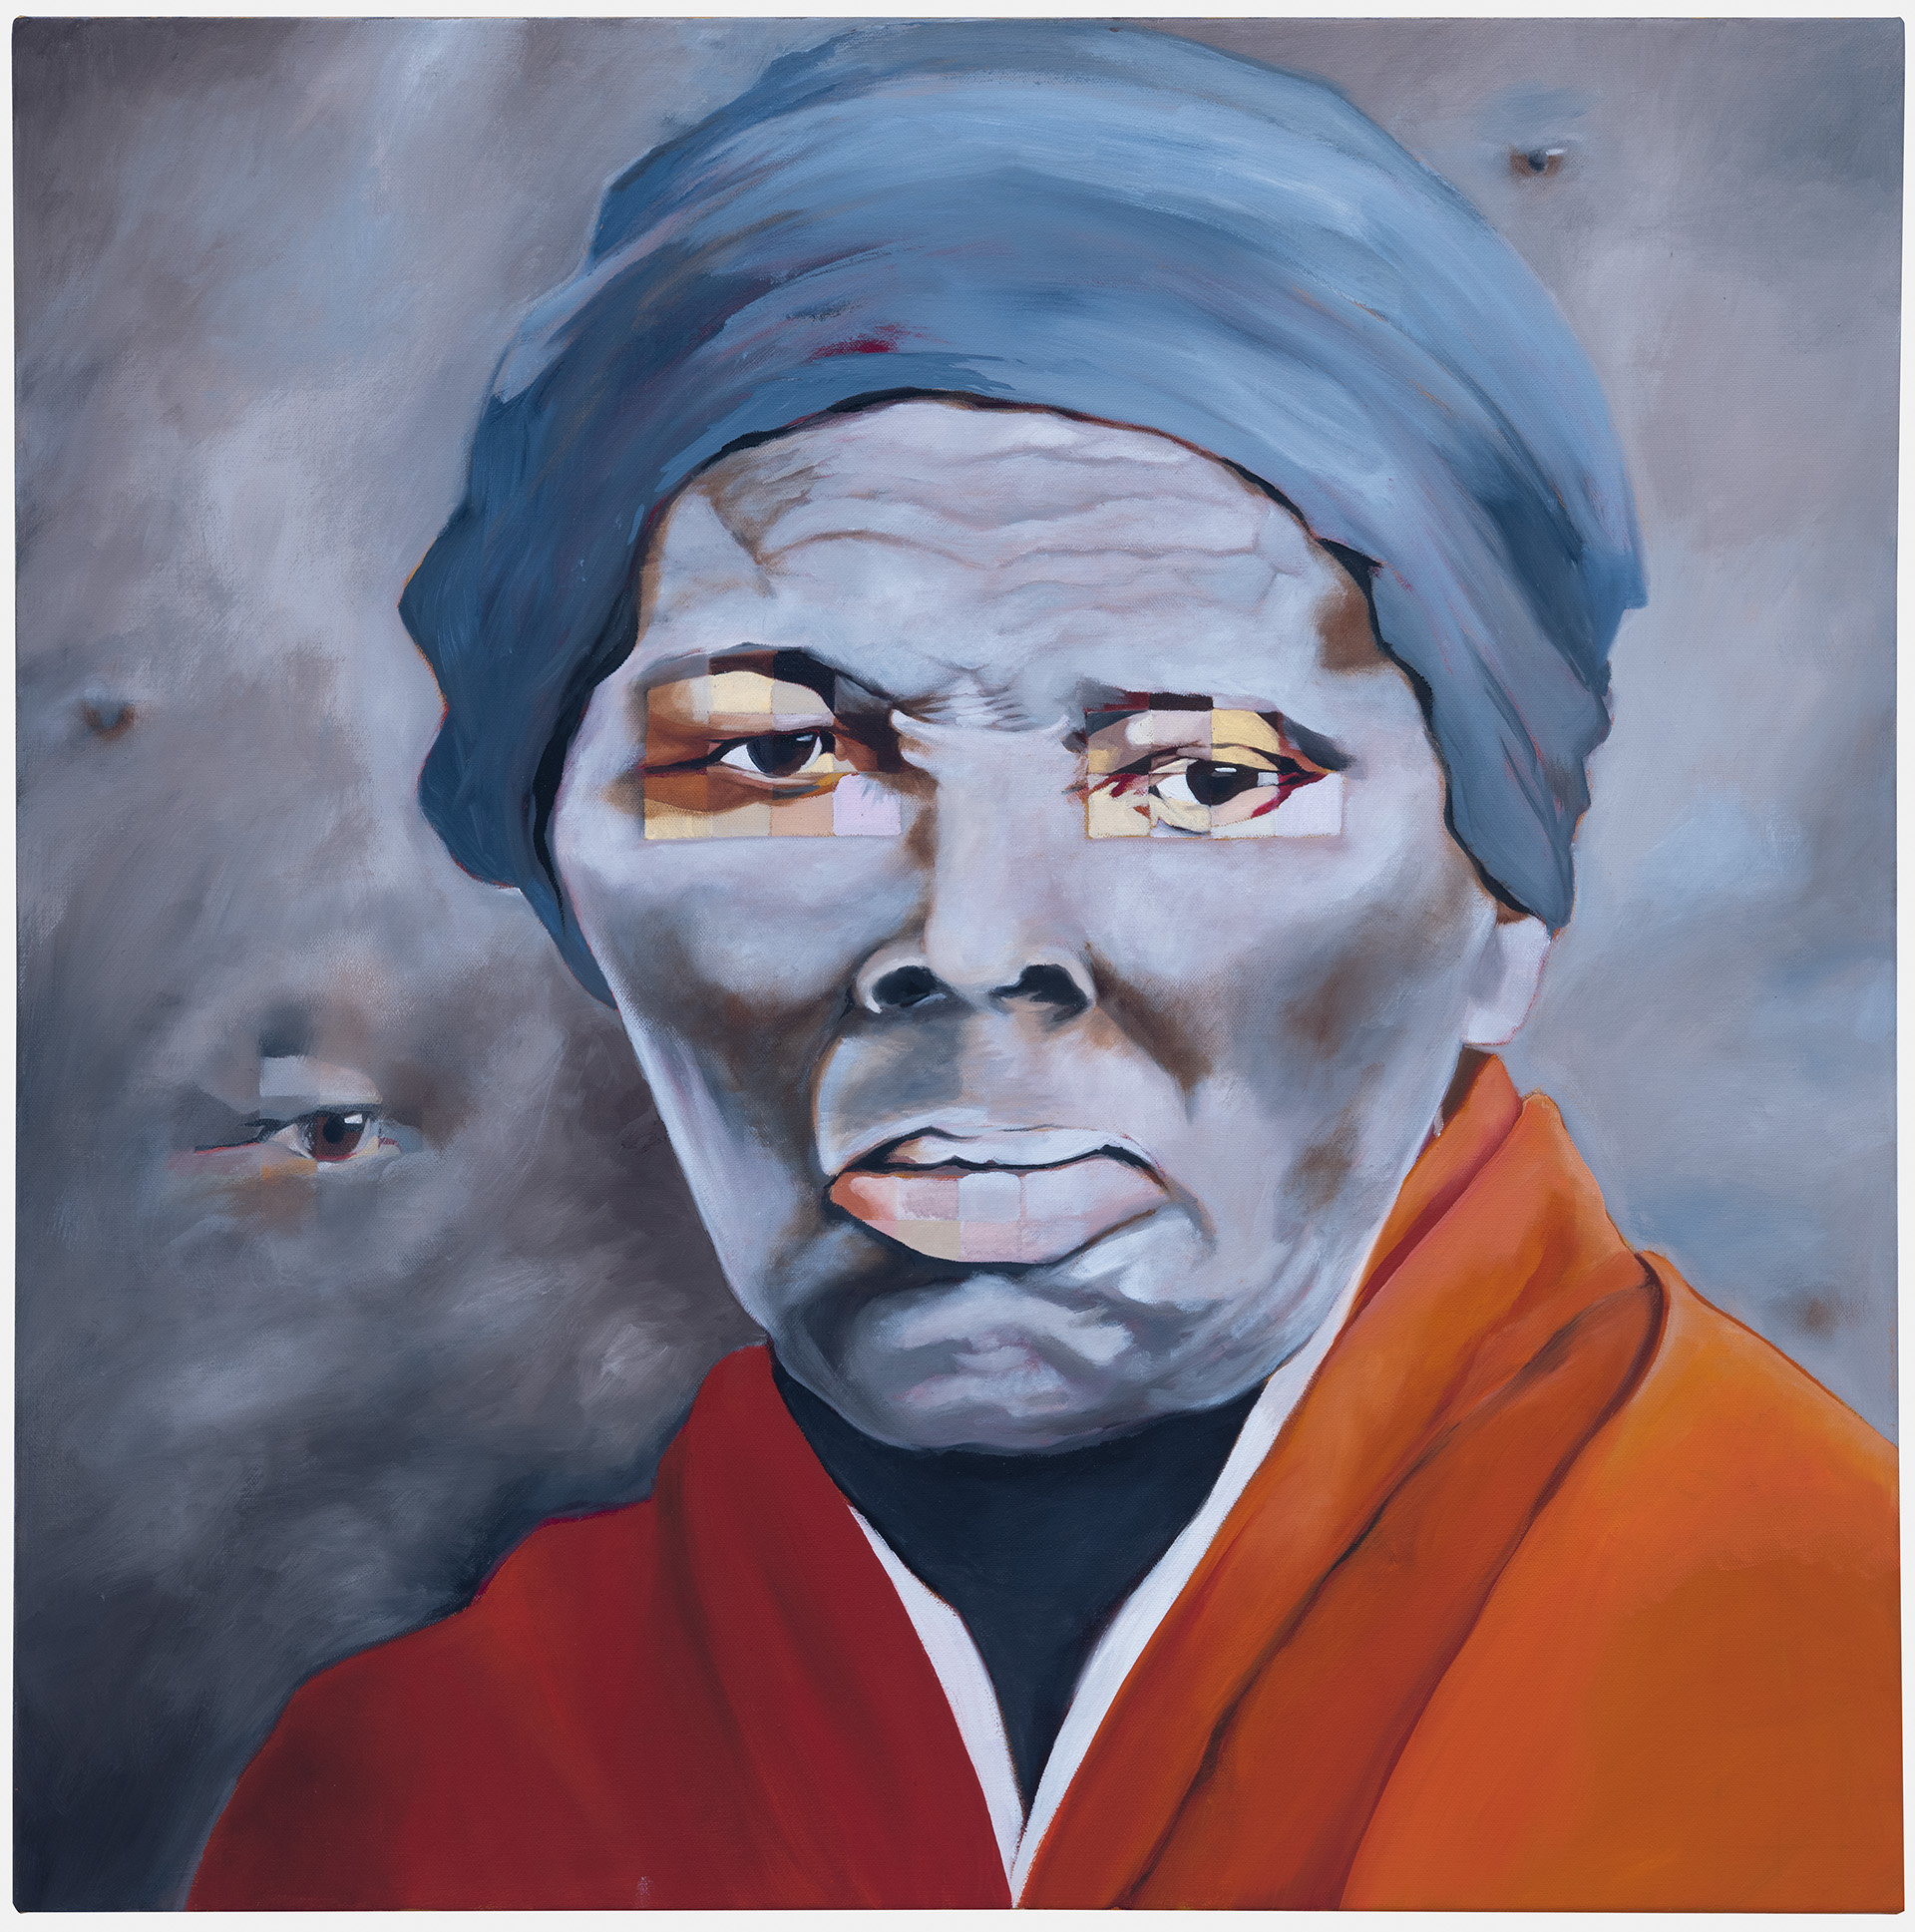 Paining of Harriet Tubman